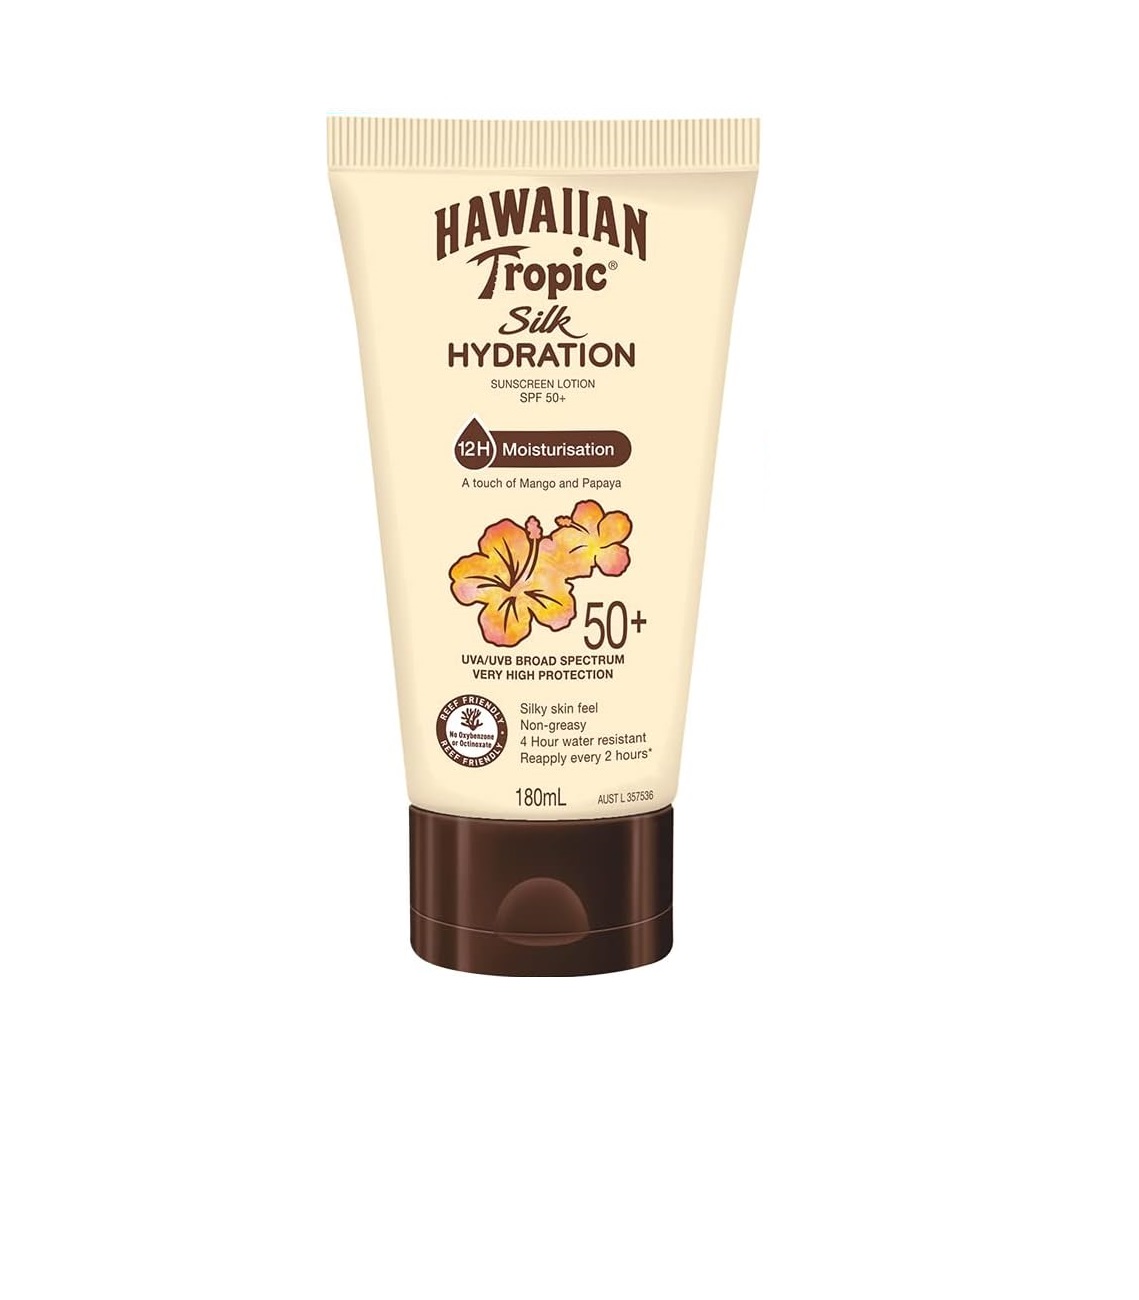 Hawaiian Tropic Silk Hydration Sunscreen Lotion SPF50+ 180ml, 12-Moisture, Non-greasy, 4-Hour Water Resistant